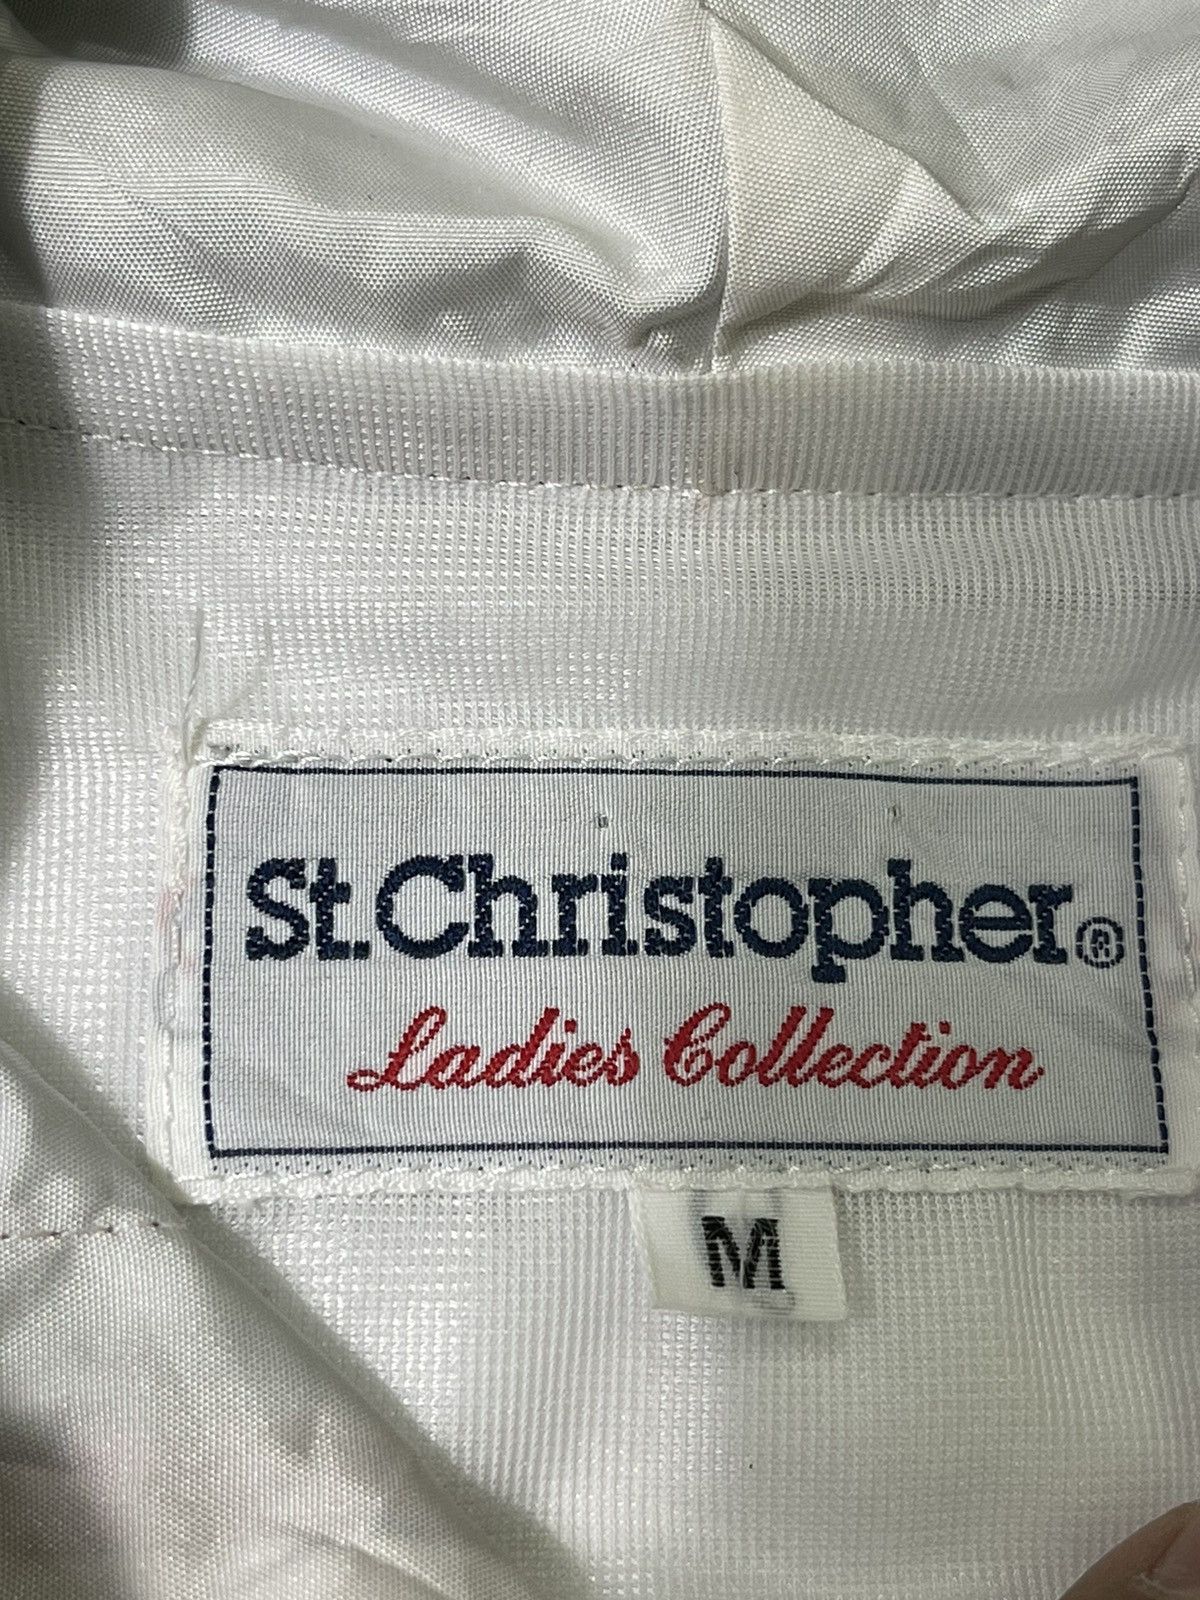 Japanese Brand St christopher windbreaker hoodie japan vintage Size US M / EU 48-50 / 2 - 7 Thumbnail